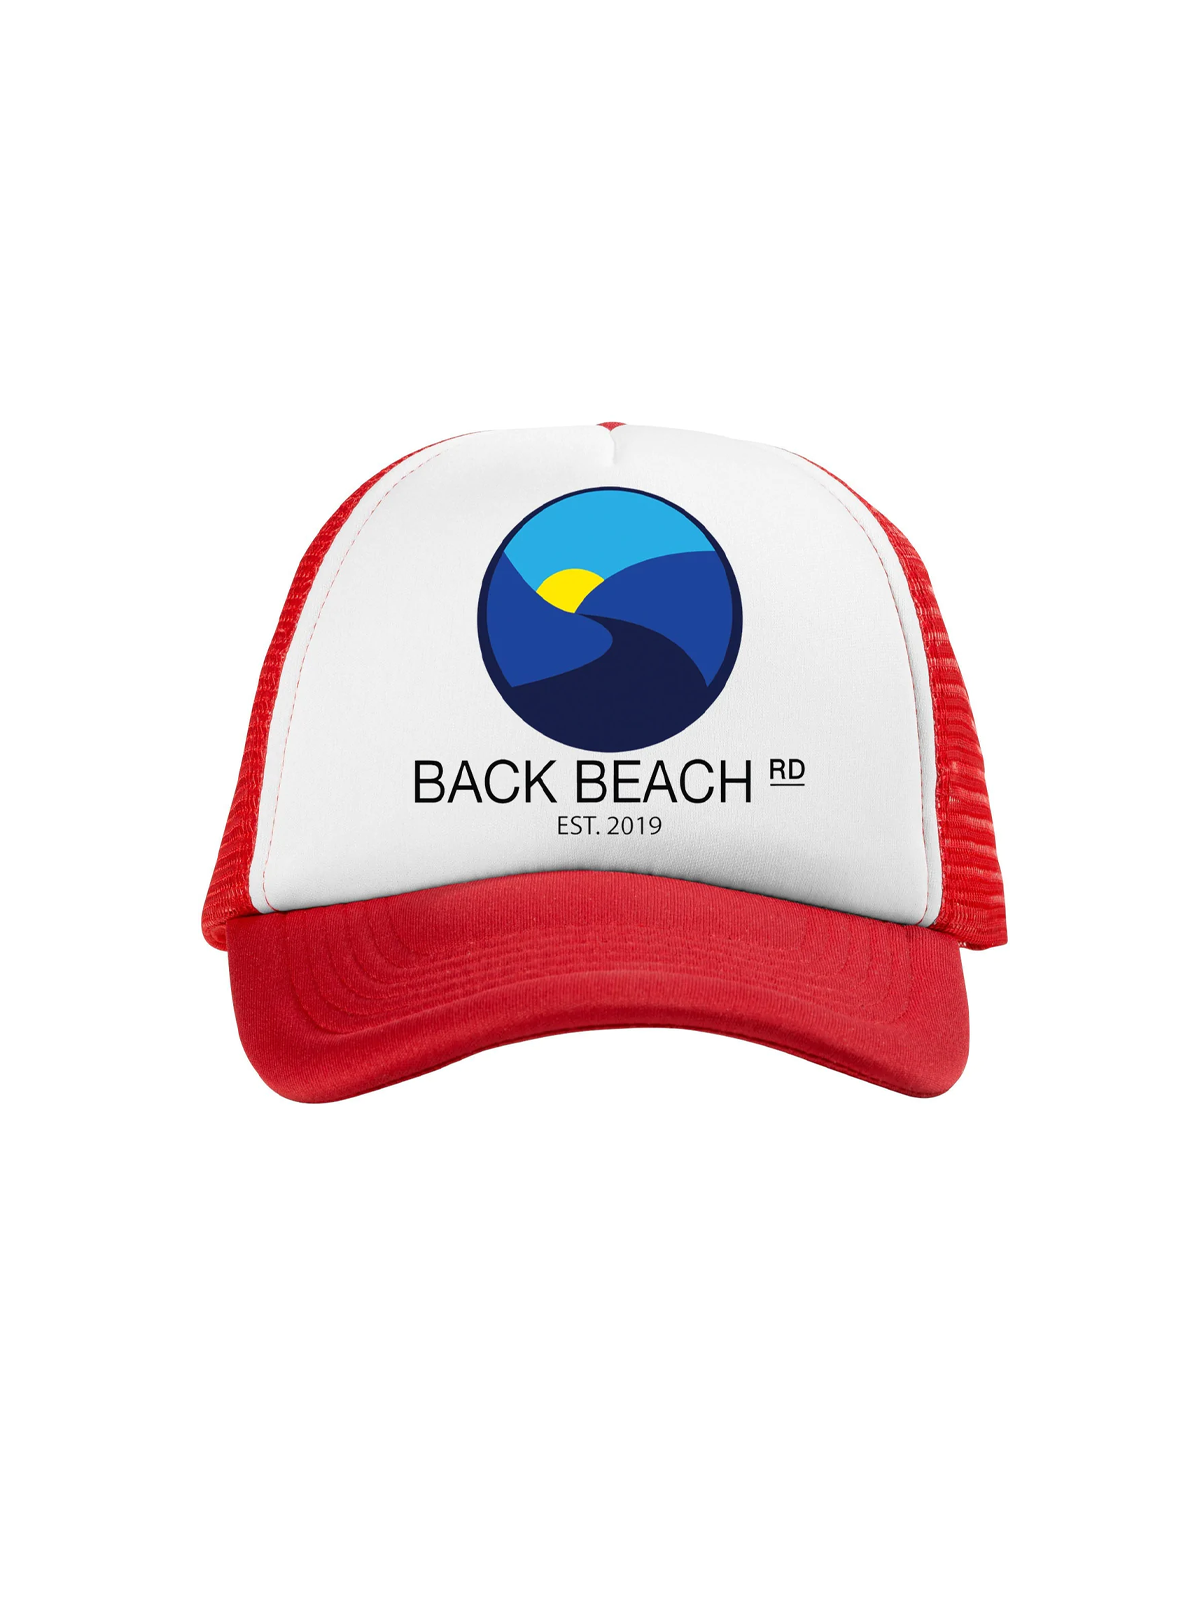 Back Beach Rd Trucker Cap Cap - Back Beach Rd